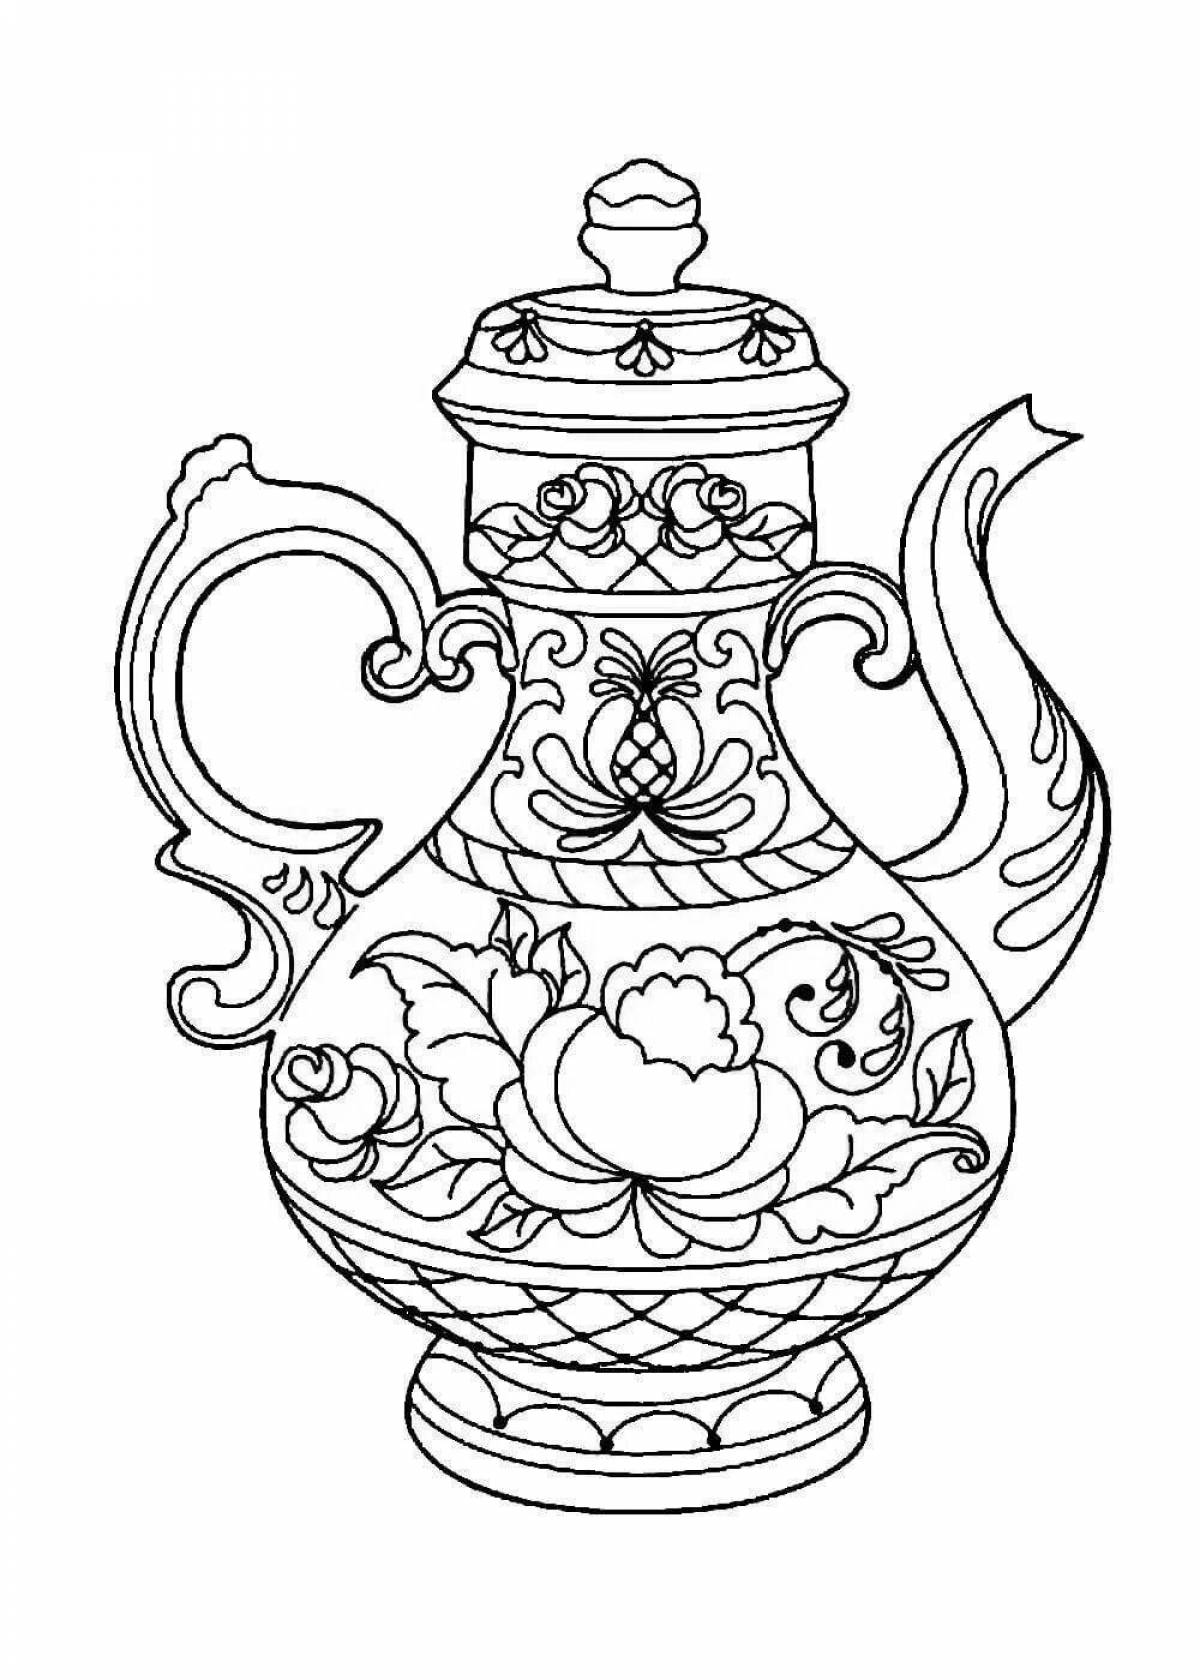 Coloring page charming gzhel mug